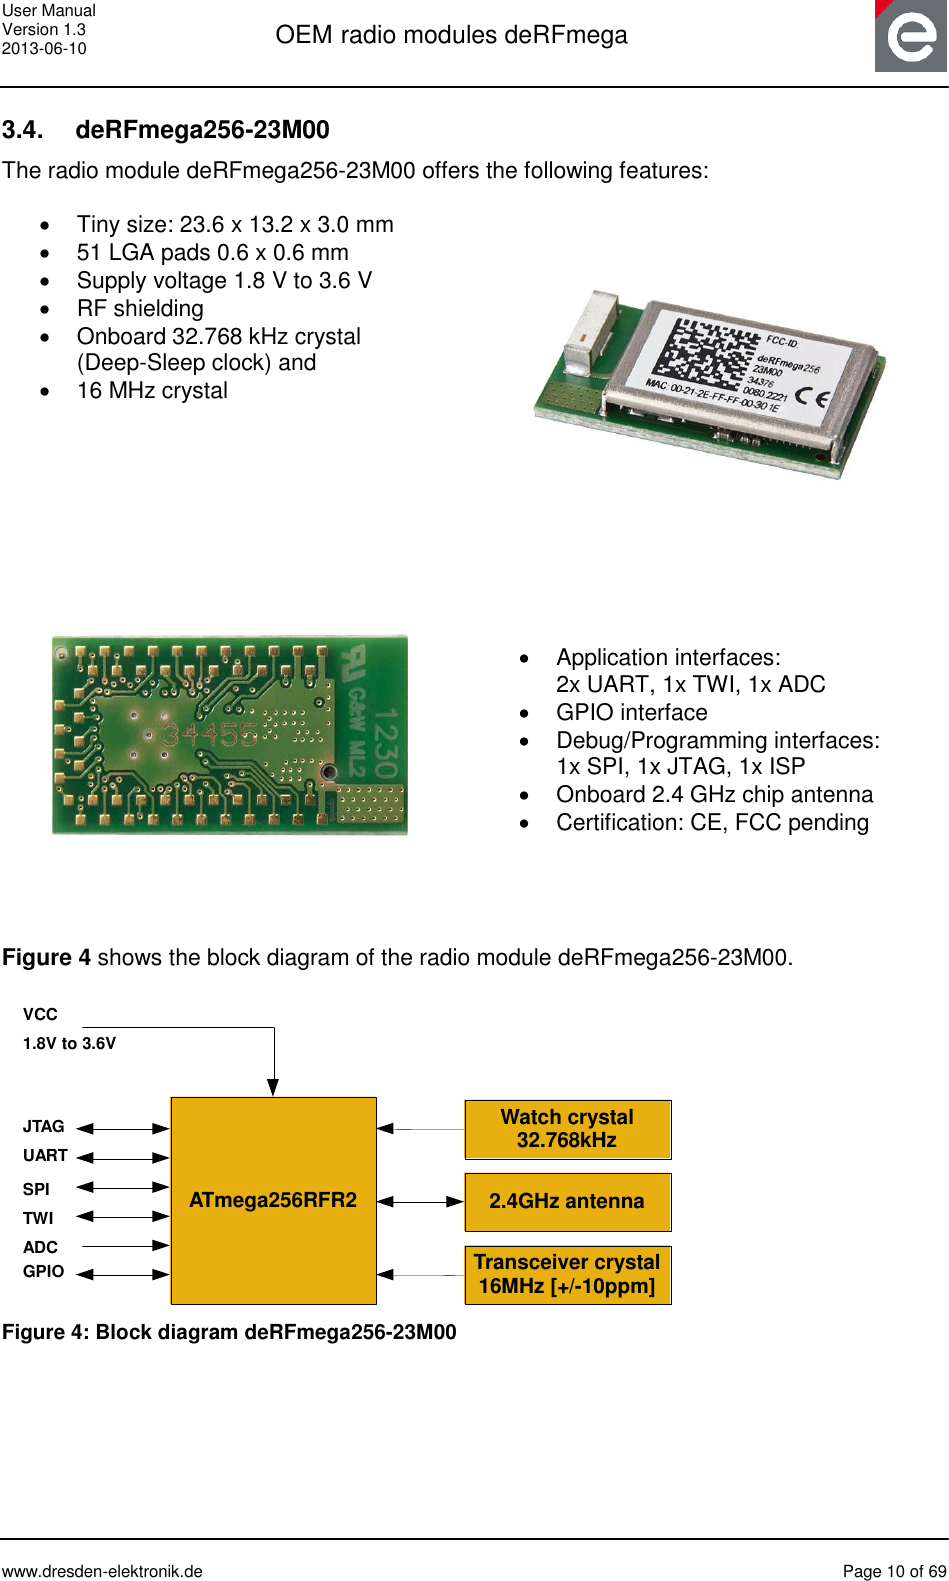 User Manual Version 1.3 2013-06-10  OEM radio modules deRFmega      www.dresden-elektronik.de  Page 10 of 69  3.4.  deRFmega256-23M00 The radio module deRFmega256-23M00 offers the following features:   Tiny size: 23.6 x 13.2 x 3.0 mm  51 LGA pads 0.6 x 0.6 mm   Supply voltage 1.8 V to 3.6 V   RF shielding   Onboard 32.768 kHz crystal  (Deep-Sleep clock) and   16 MHz crystal        Application interfaces: 2x UART, 1x TWI, 1x ADC   GPIO interface   Debug/Programming interfaces:  1x SPI, 1x JTAG, 1x ISP   Onboard 2.4 GHz chip antenna  Certification: CE, FCC pending   Figure 4 shows the block diagram of the radio module deRFmega256-23M00.   ATmega256RFR2Transceiver crystal16MHz [+/-10ppm]JTAGUARTVCC1.8V to 3.6VWatch crystal32.768kHzSPITWIADCGPIO2.4GHz antenna Figure 4: Block diagram deRFmega256-23M00  